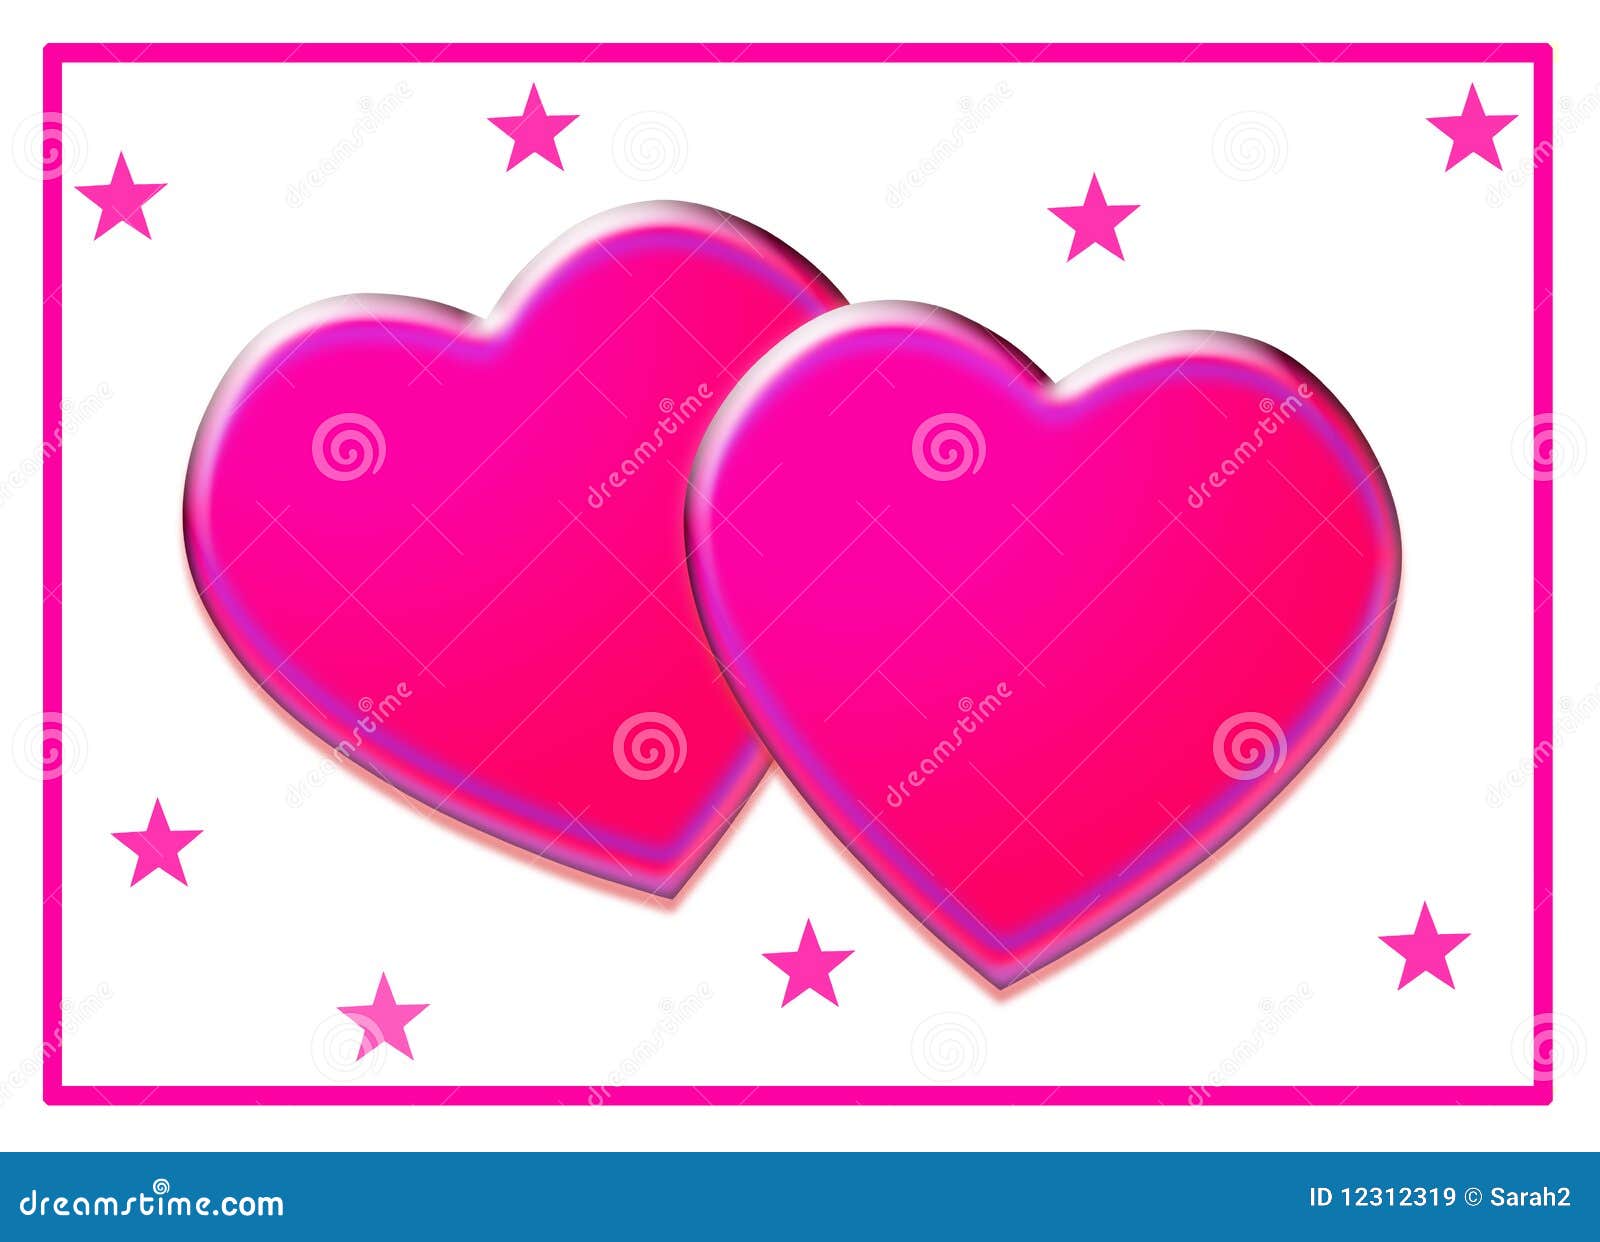 Interlocking Pink Love Hearts Stock Illustration - Image: 123123191300 x 1026